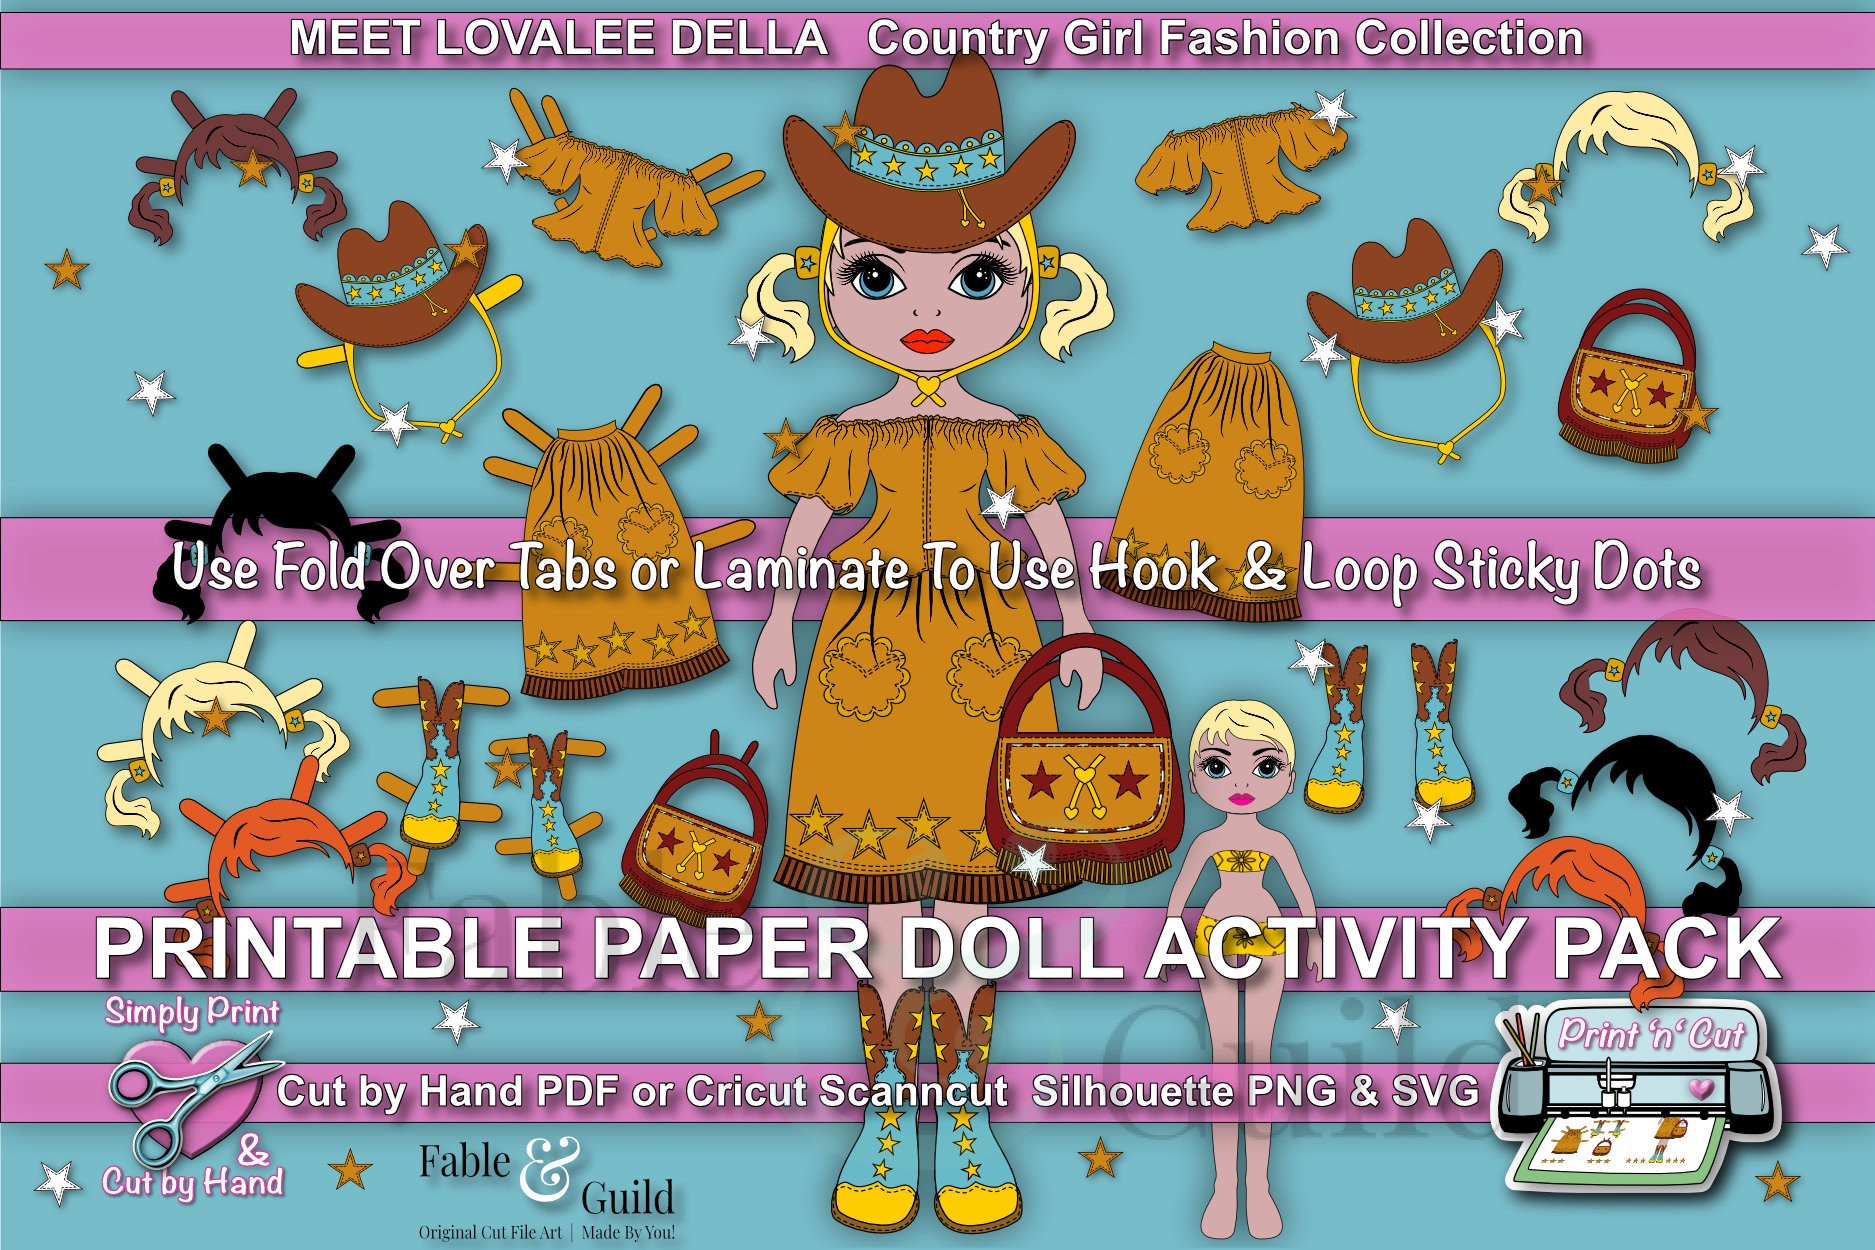 Della Country Girl - printable paper dolls PDF